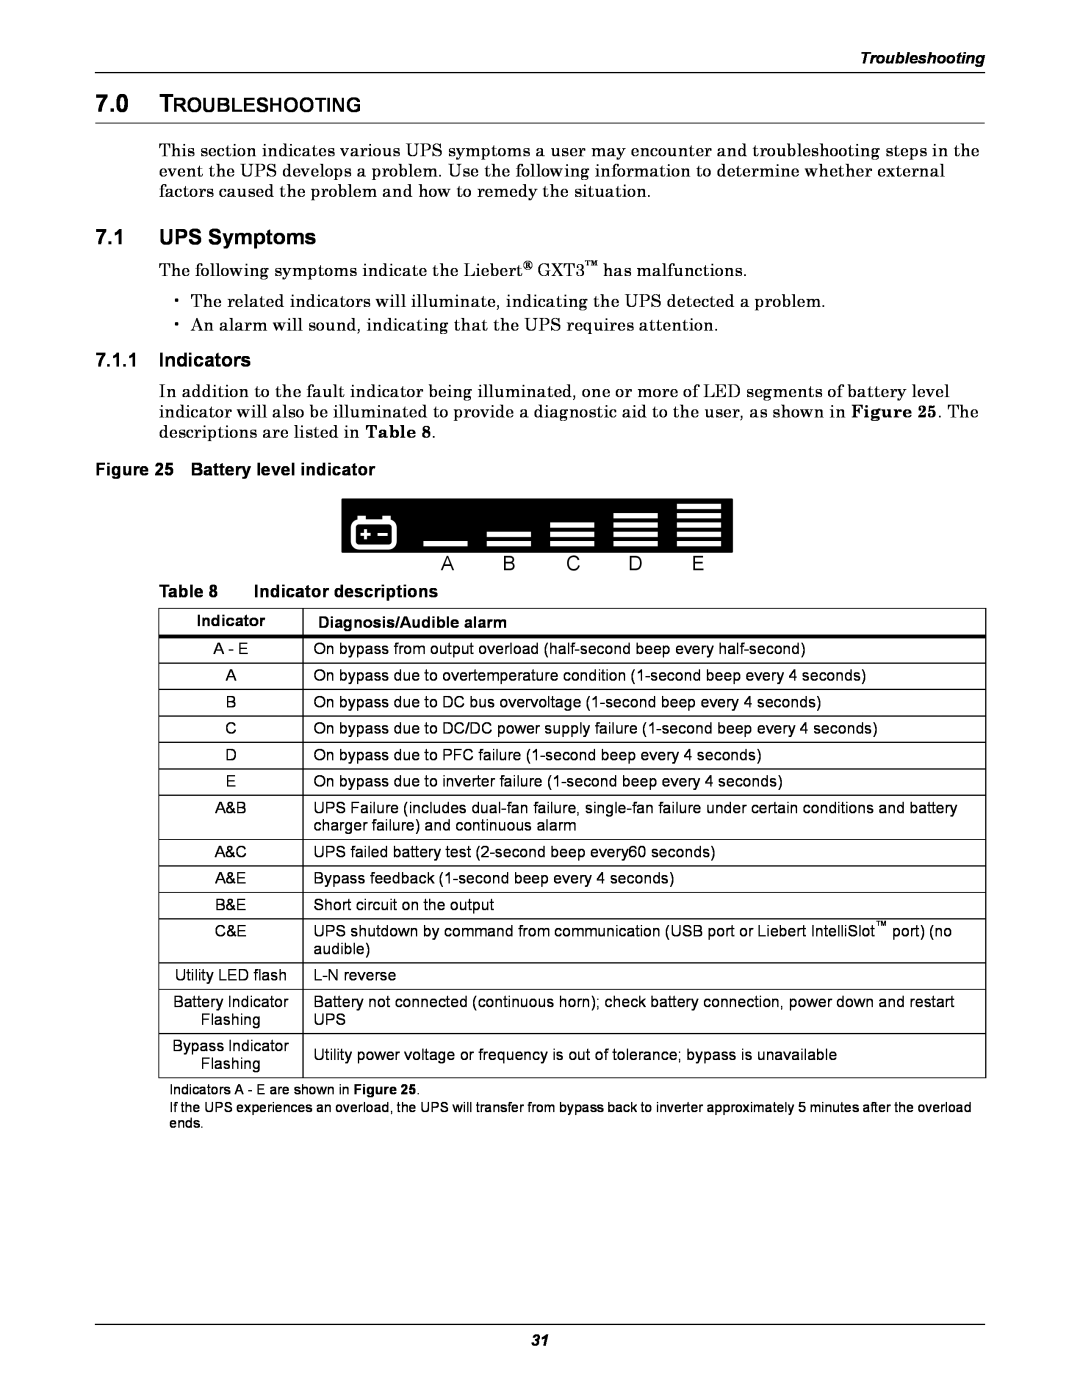 Emerson 208V, GXT3 user manual UPS Symptoms, Troubleshooting, Indicators, Battery level indicator, Indicator descriptions 